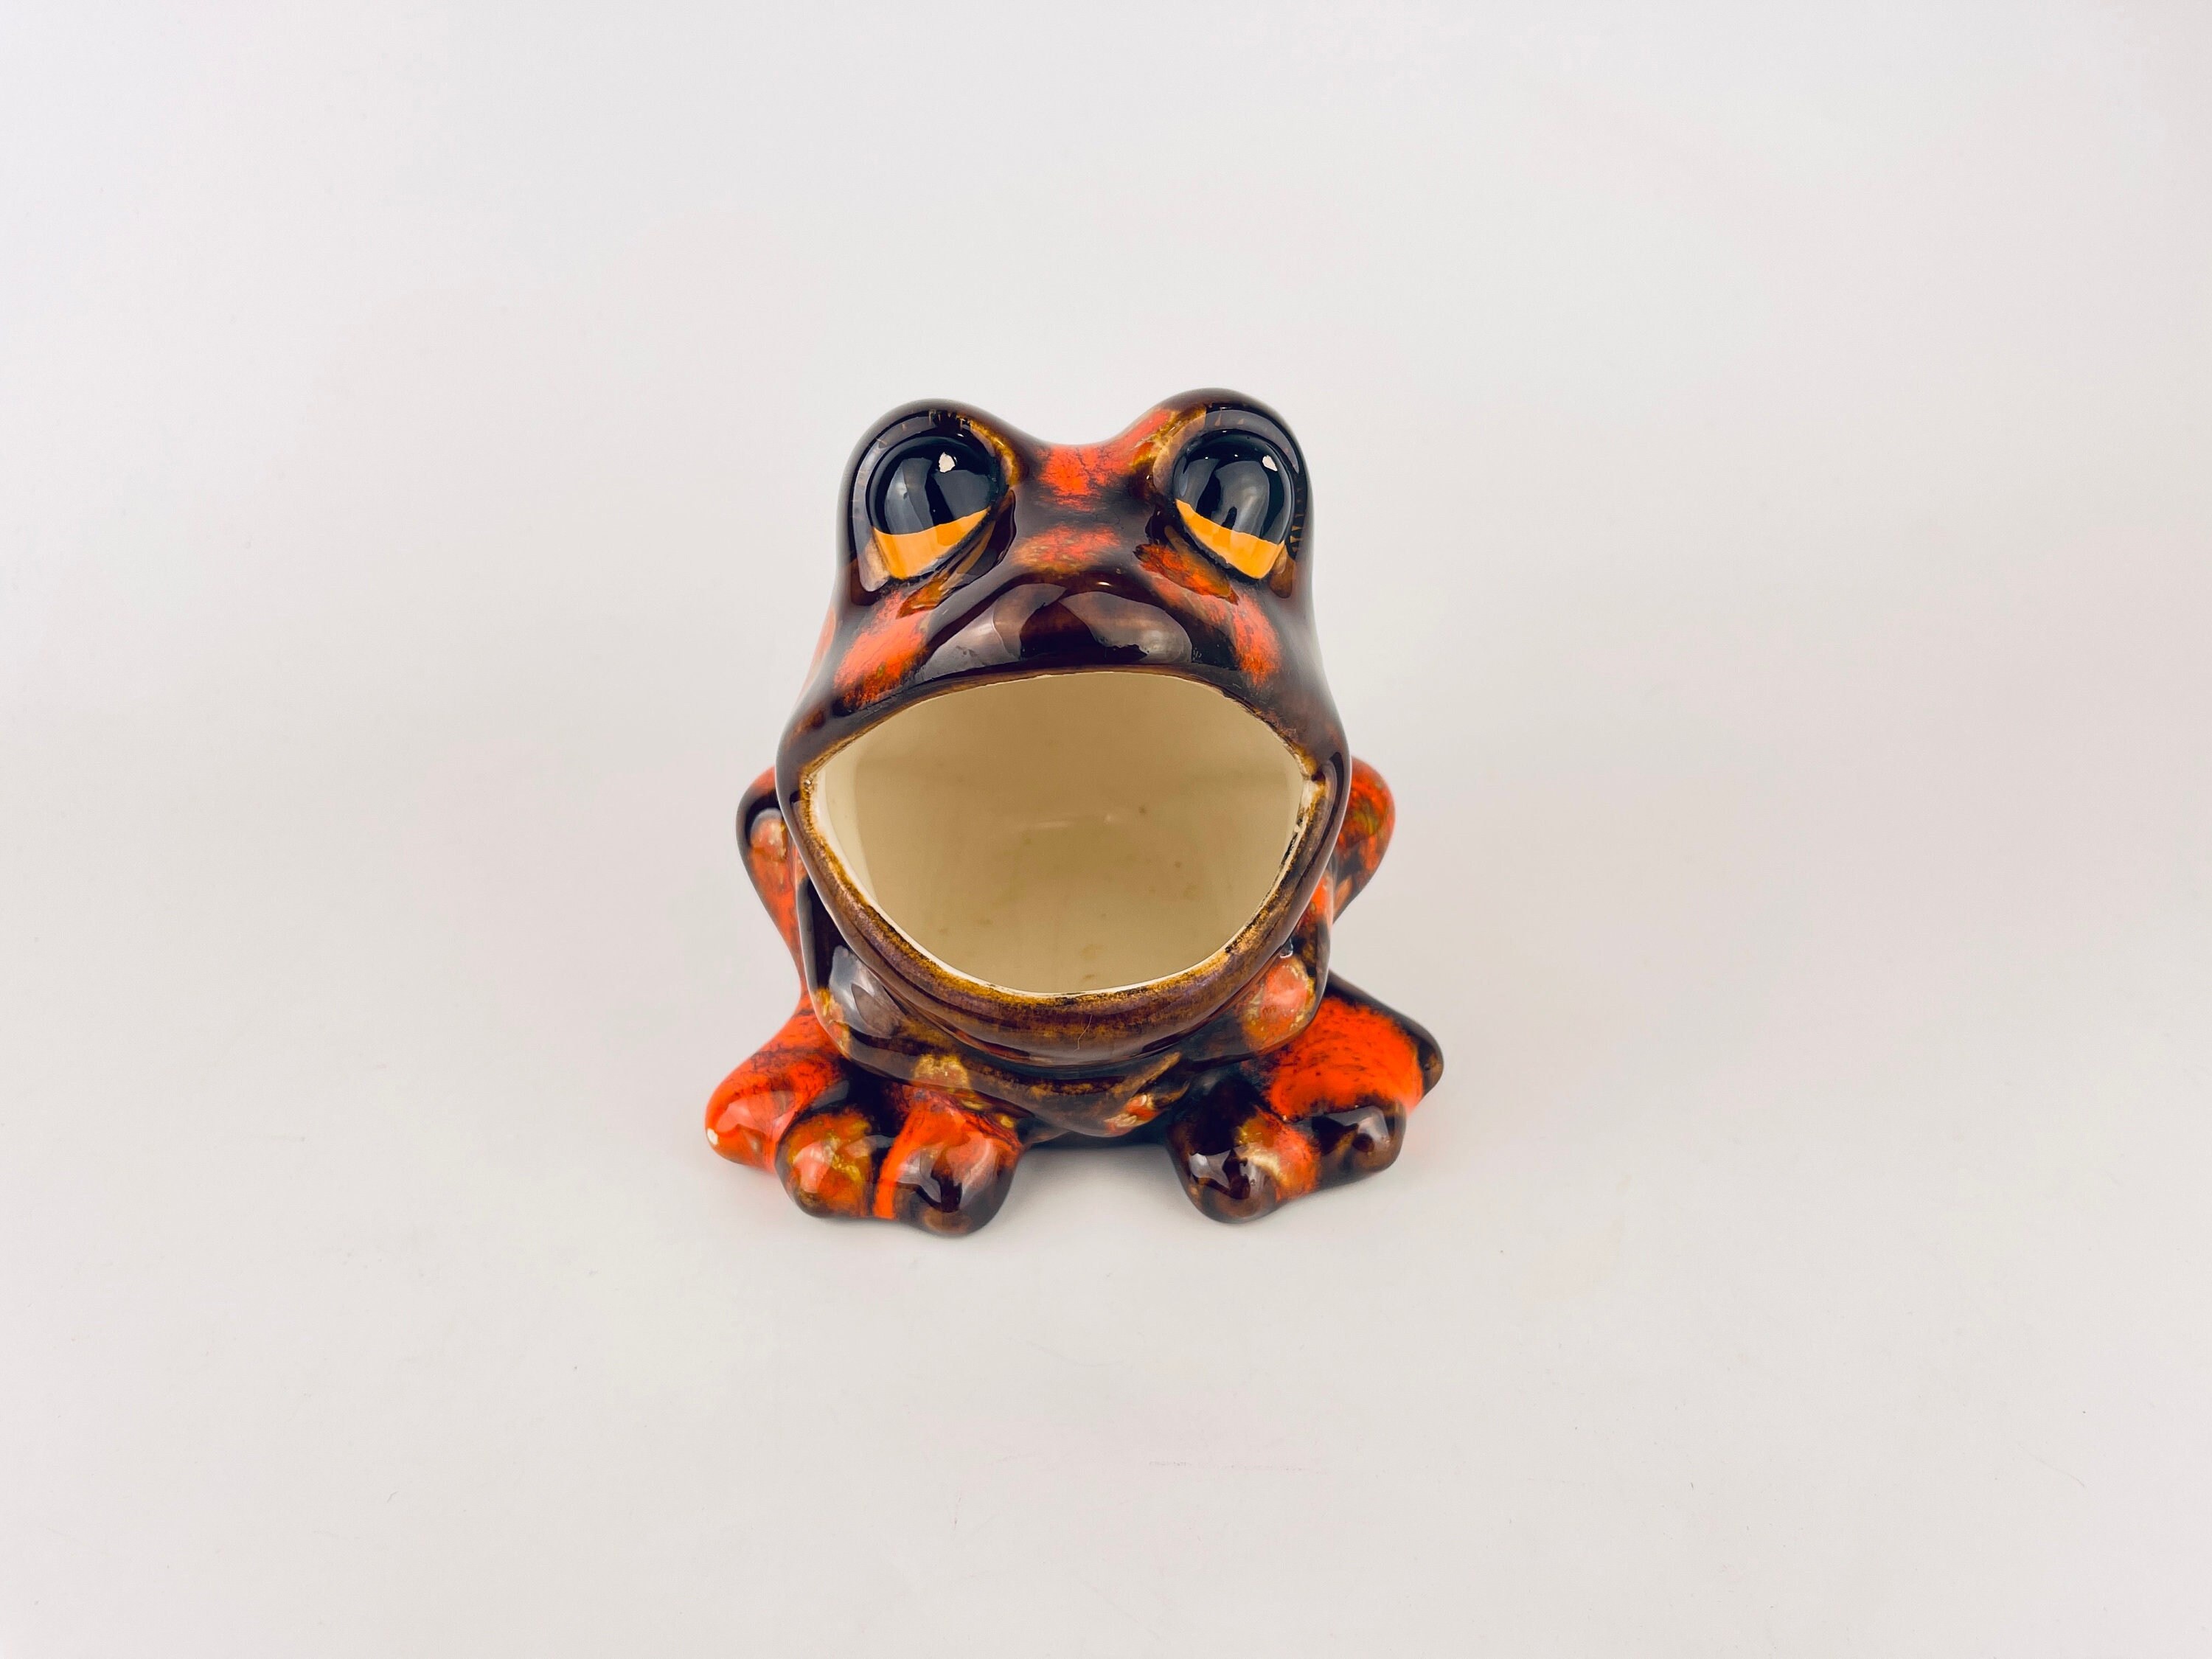 Frog Scrubby Holder, Vintage 